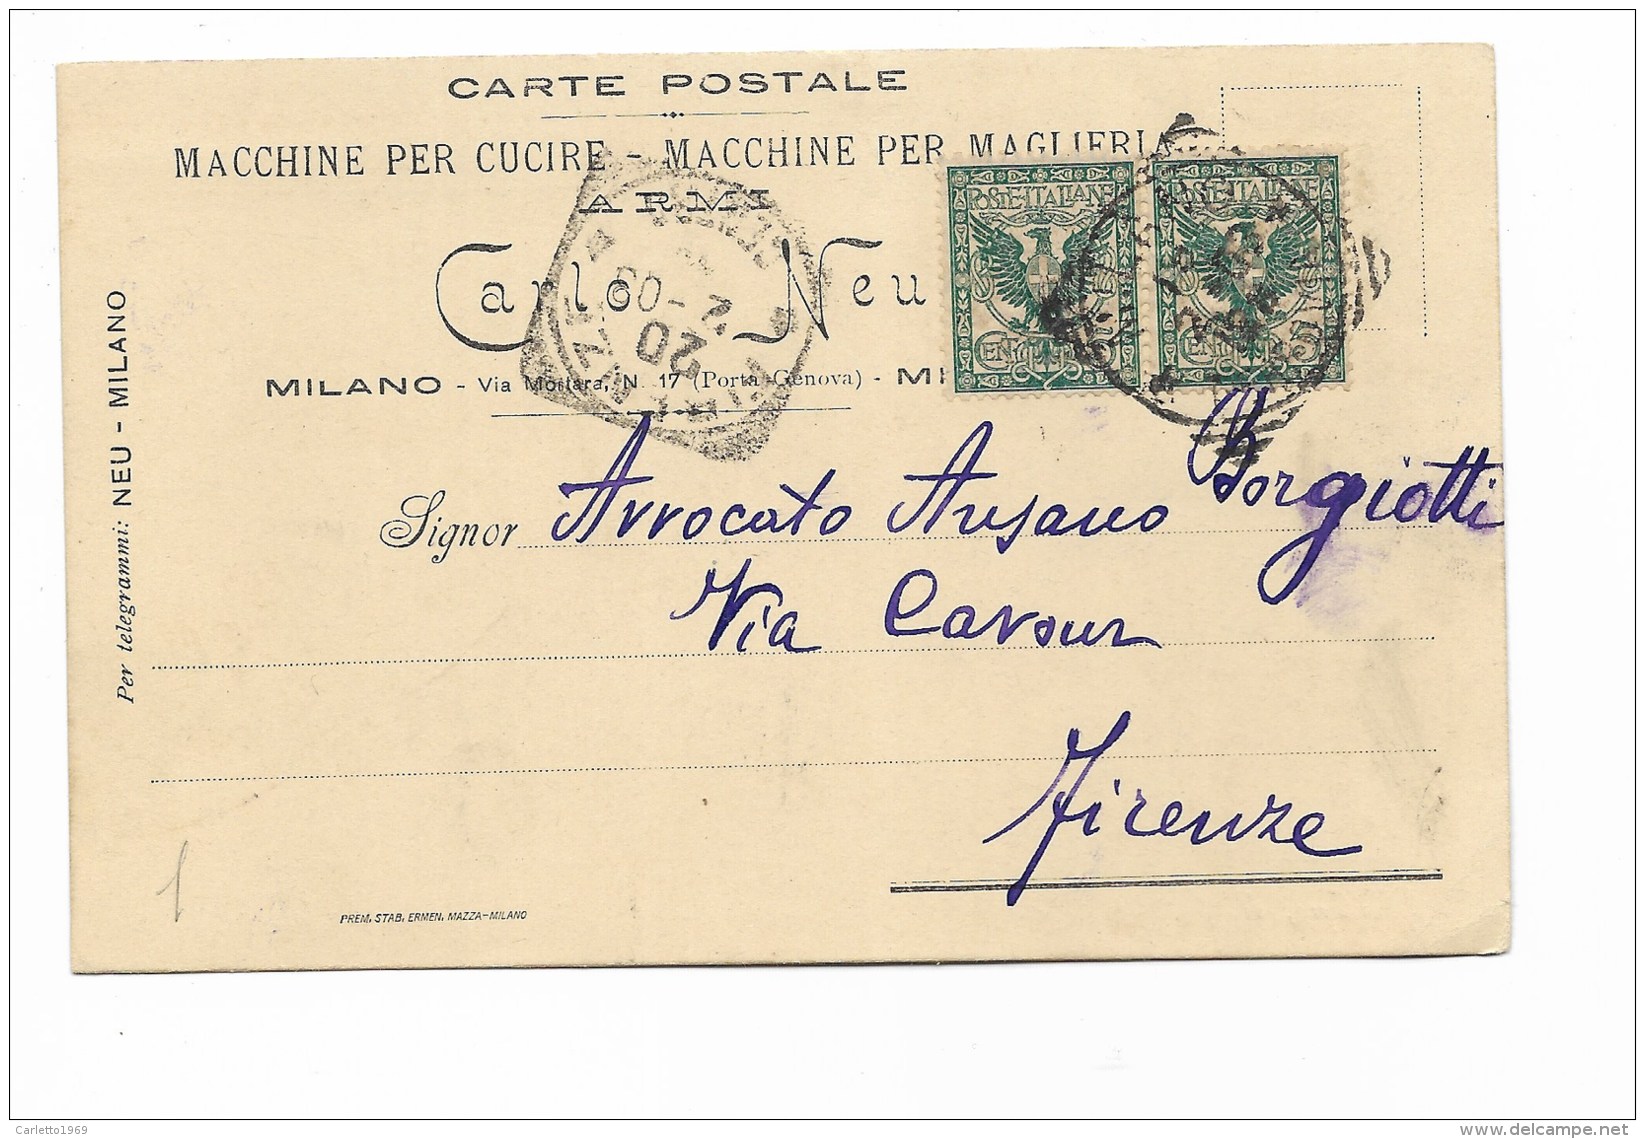 Francobolli 5 Centesimi Aquila Sabauda Su Carta Postale - Poststempel